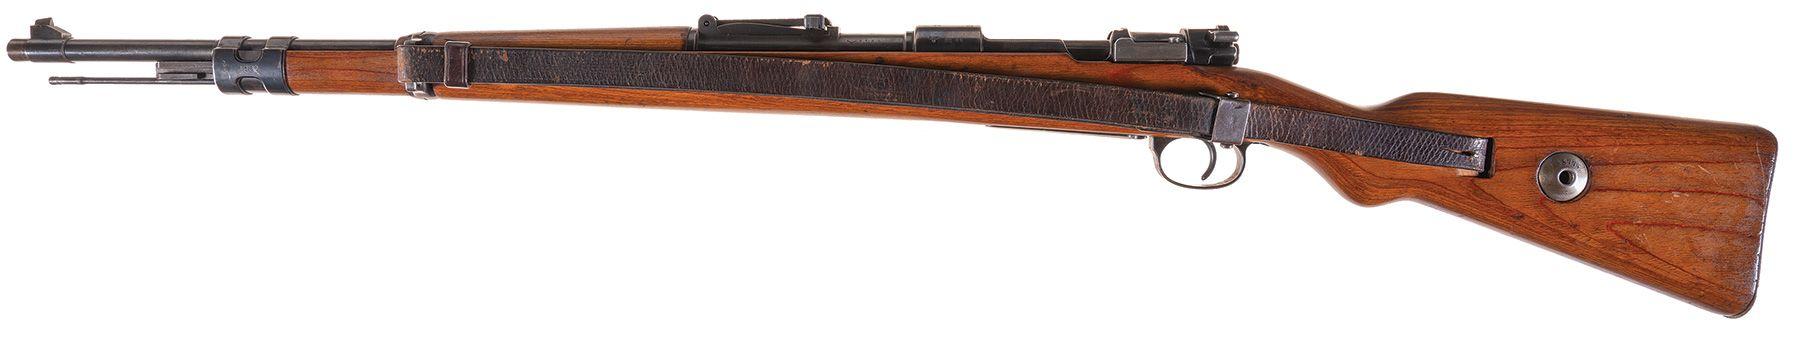 Mauser "243/1940" 98k Rifle, Kriegsmarine Marked Stock